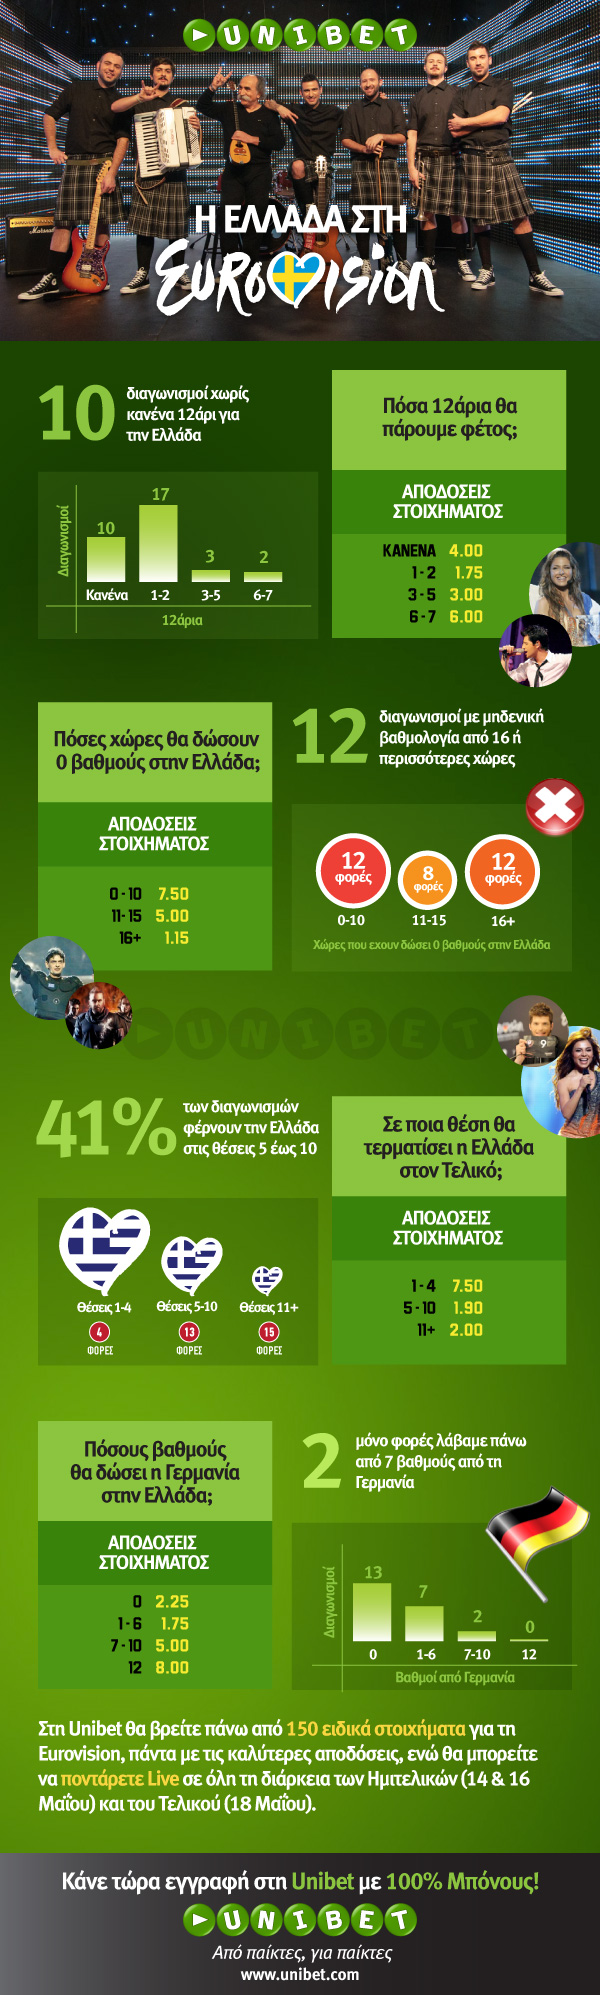 Eurovision 2013: Δες το Infographic με τα στοιχήματα για την Ελλάδα! - Φωτογραφία 2